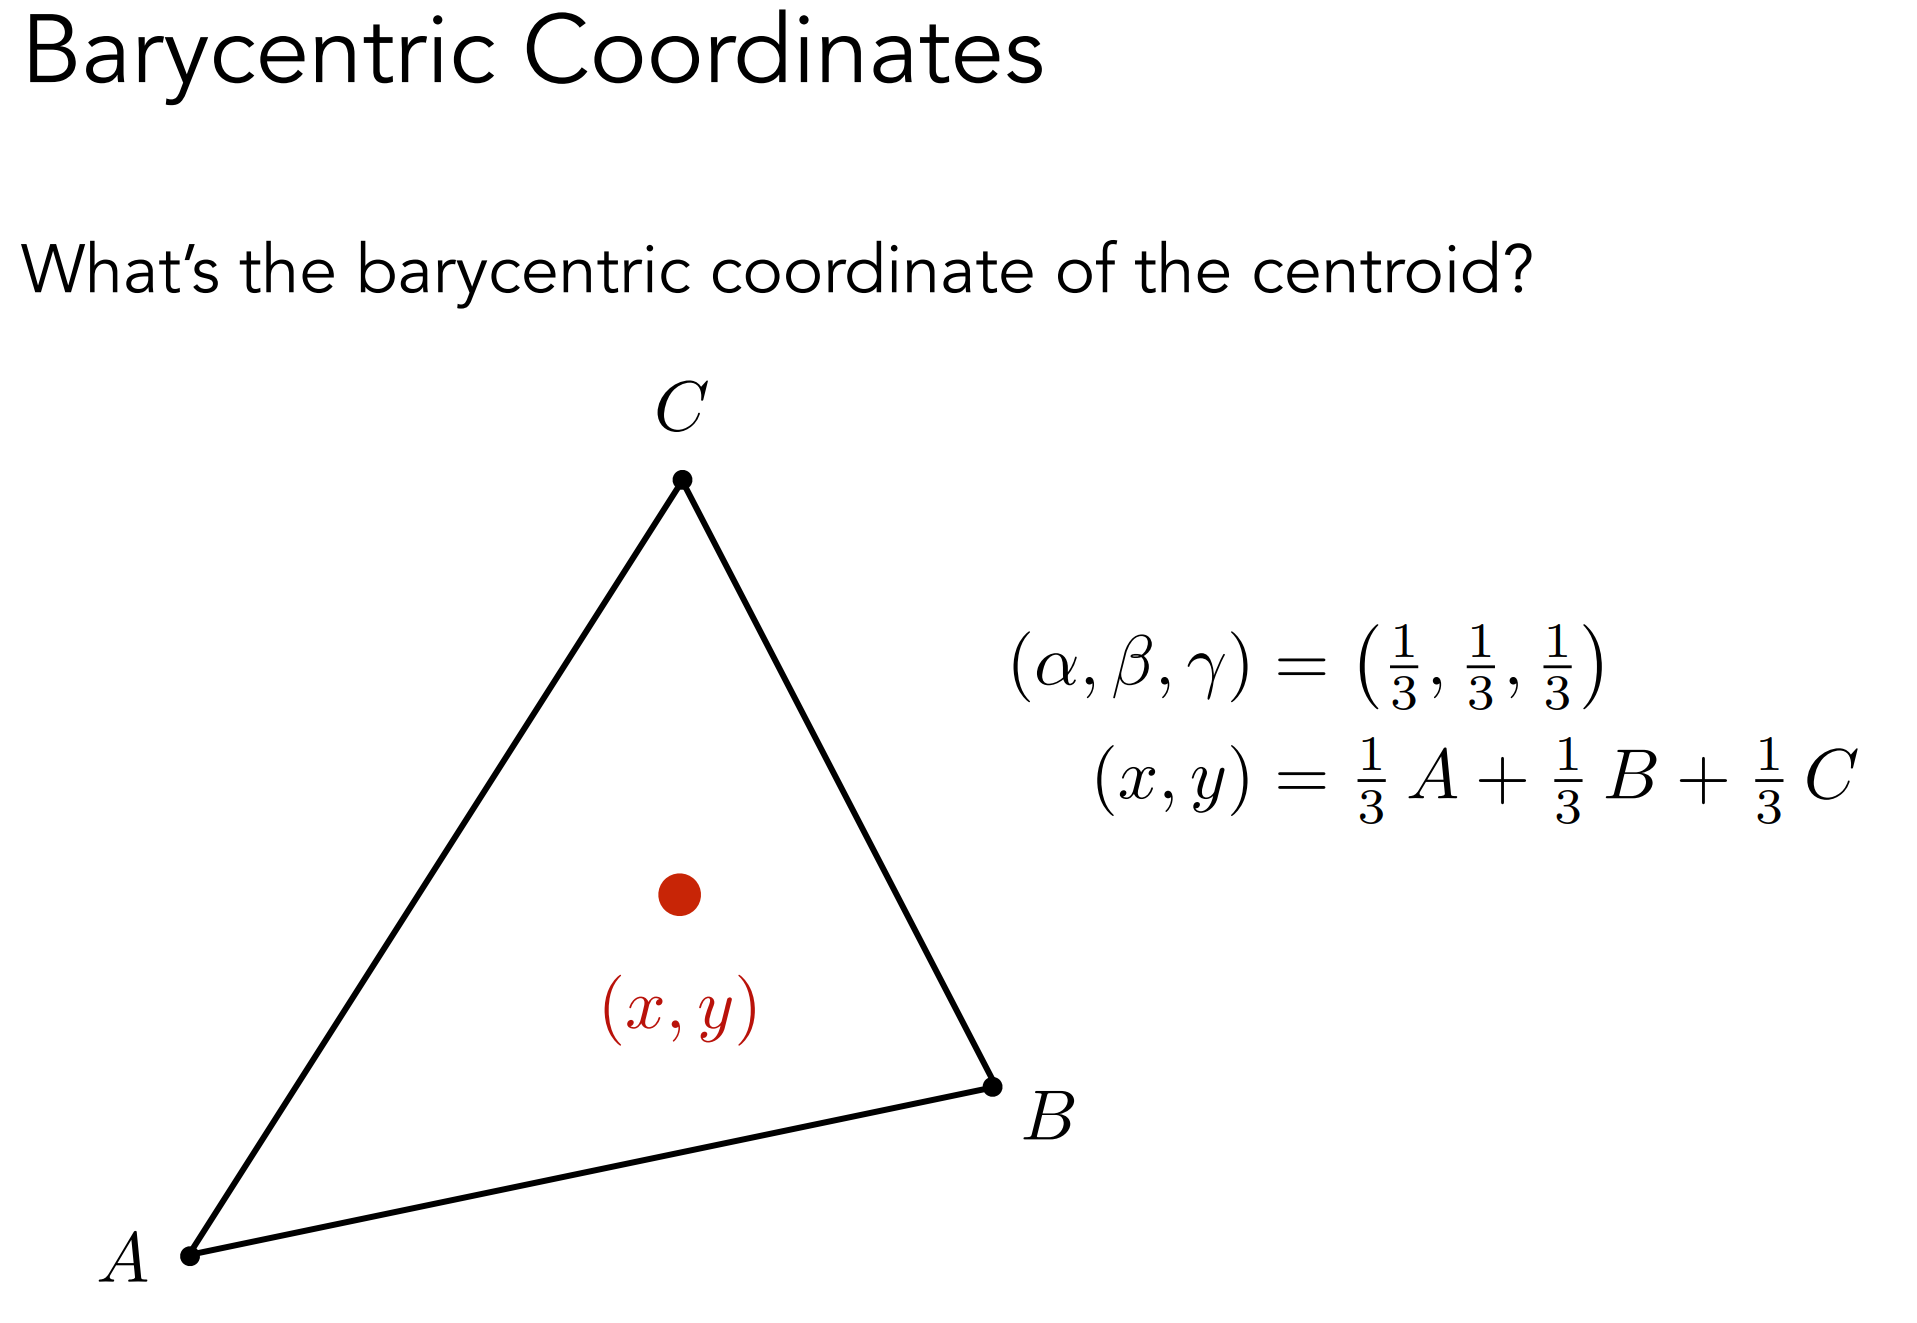 Barycentiric_inMath03